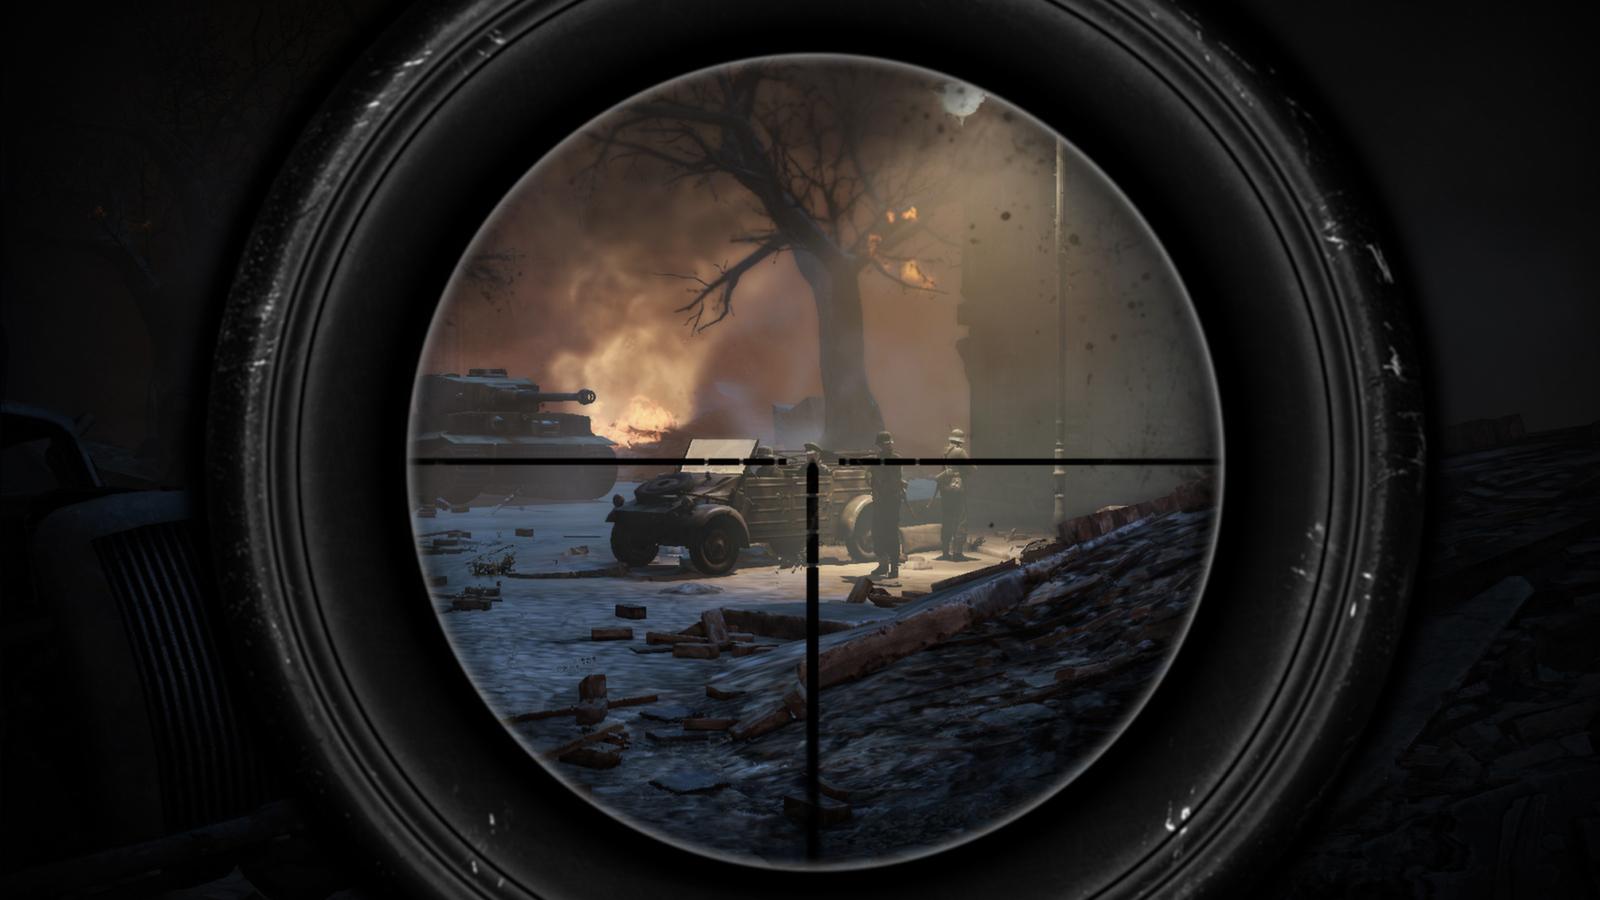 Screenshot №8 from game Sniper Elite V2